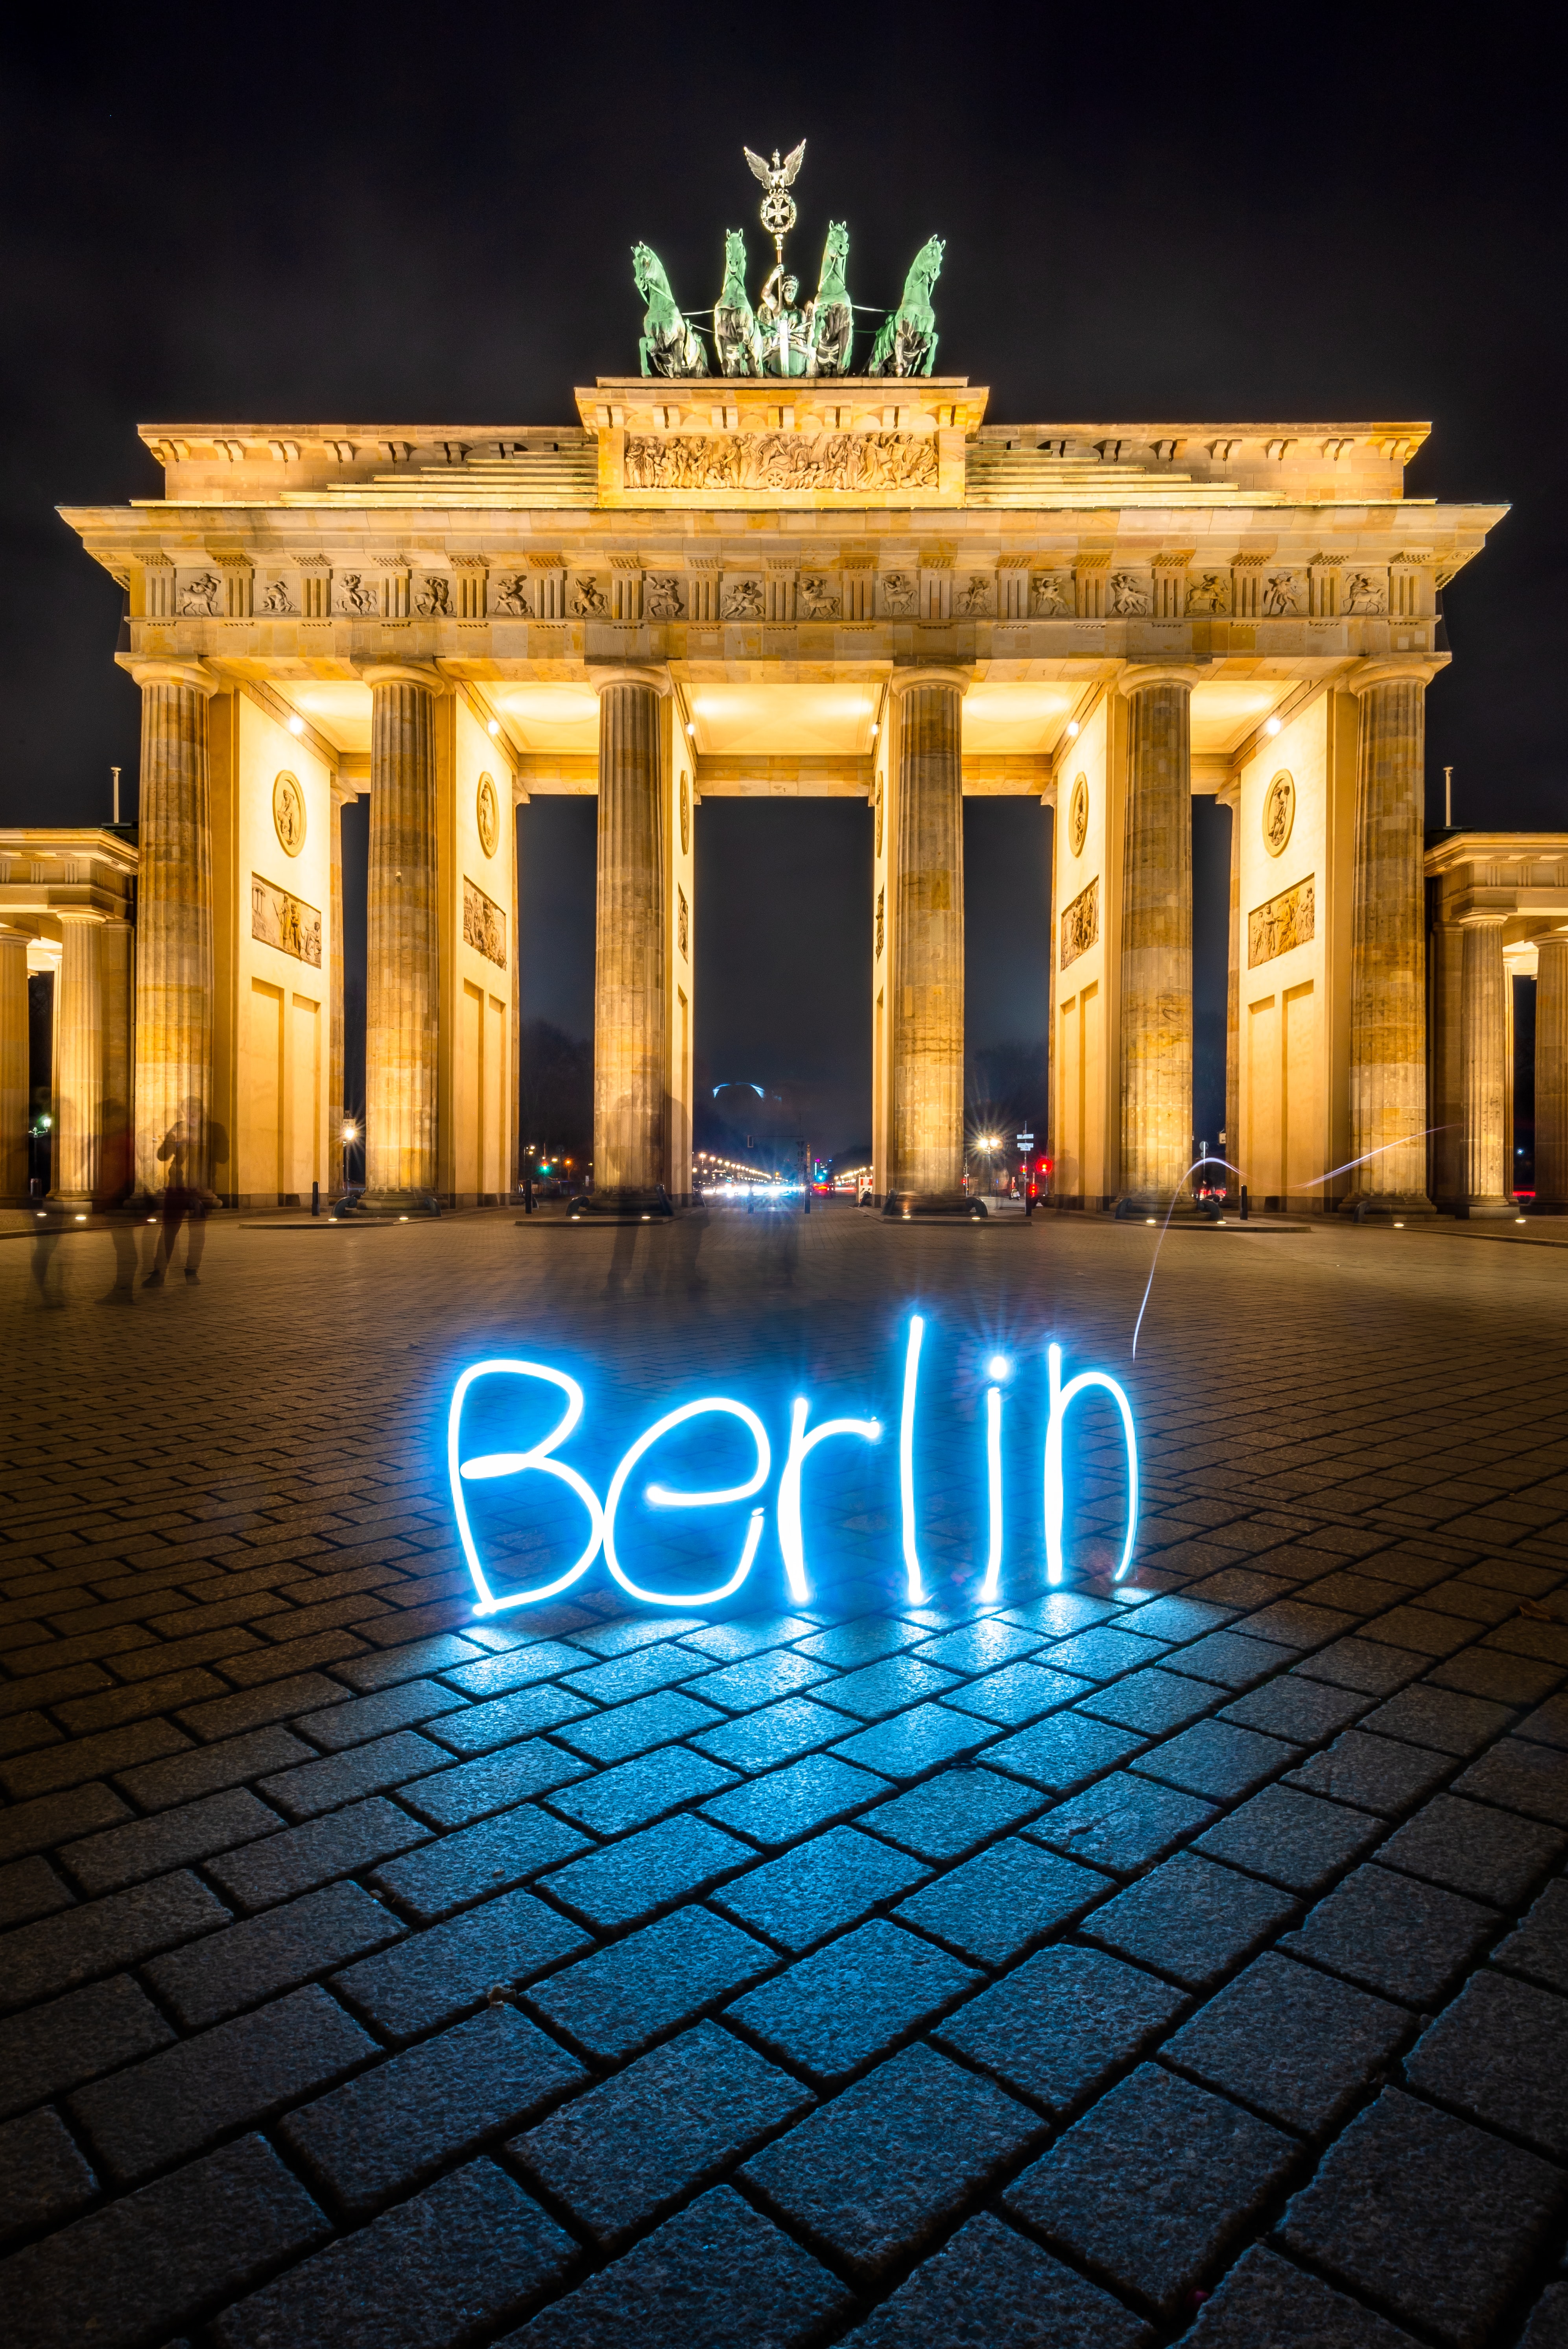 berlin, cities, architecture, neon, freezelight, glow